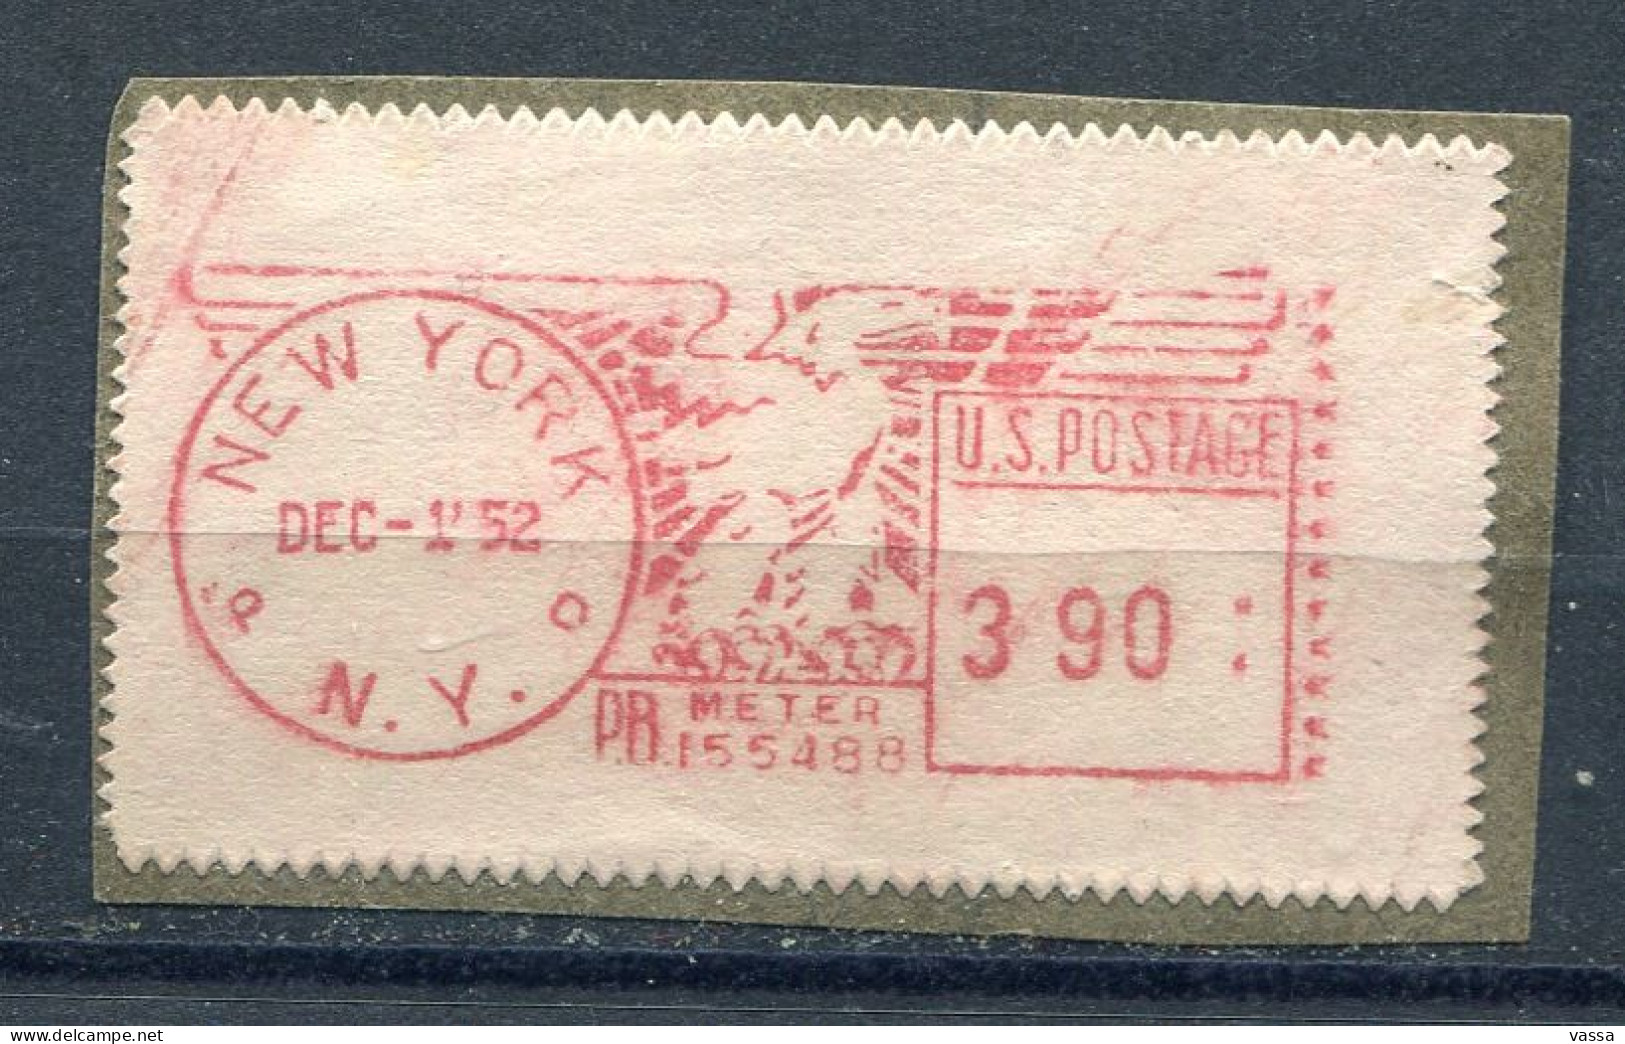 USA -1952 - PB Meter N°155488 PB - New-York  / Fragment- Aigle - Gebruikt